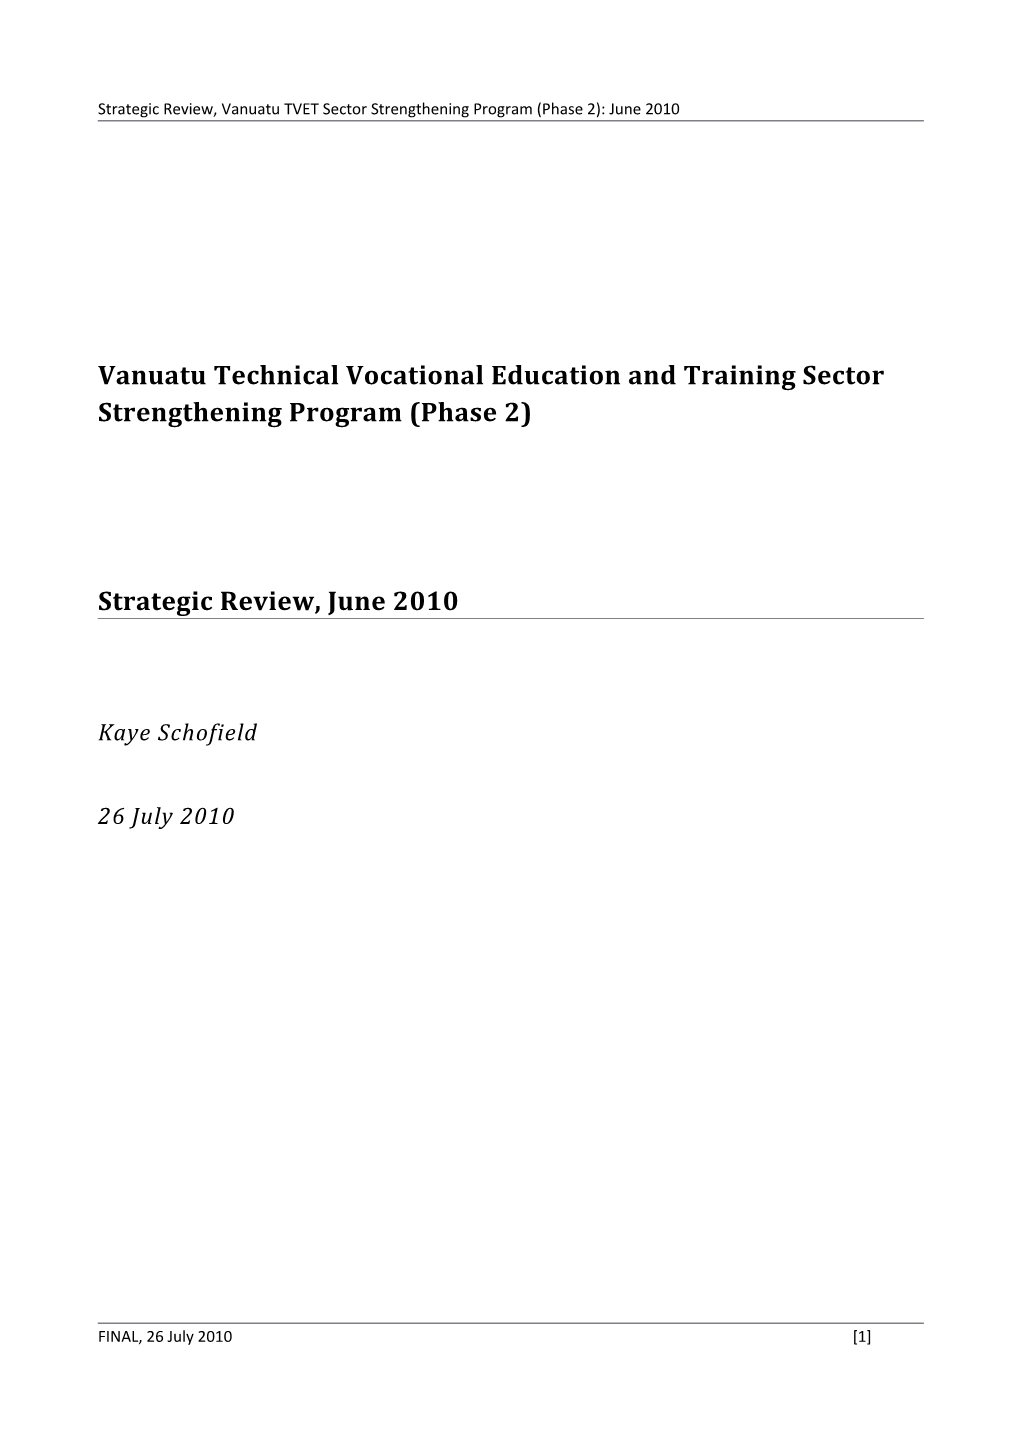 Vanuatu Technical Vocational Education And Training Sector Strengthening Program (Phase 2)